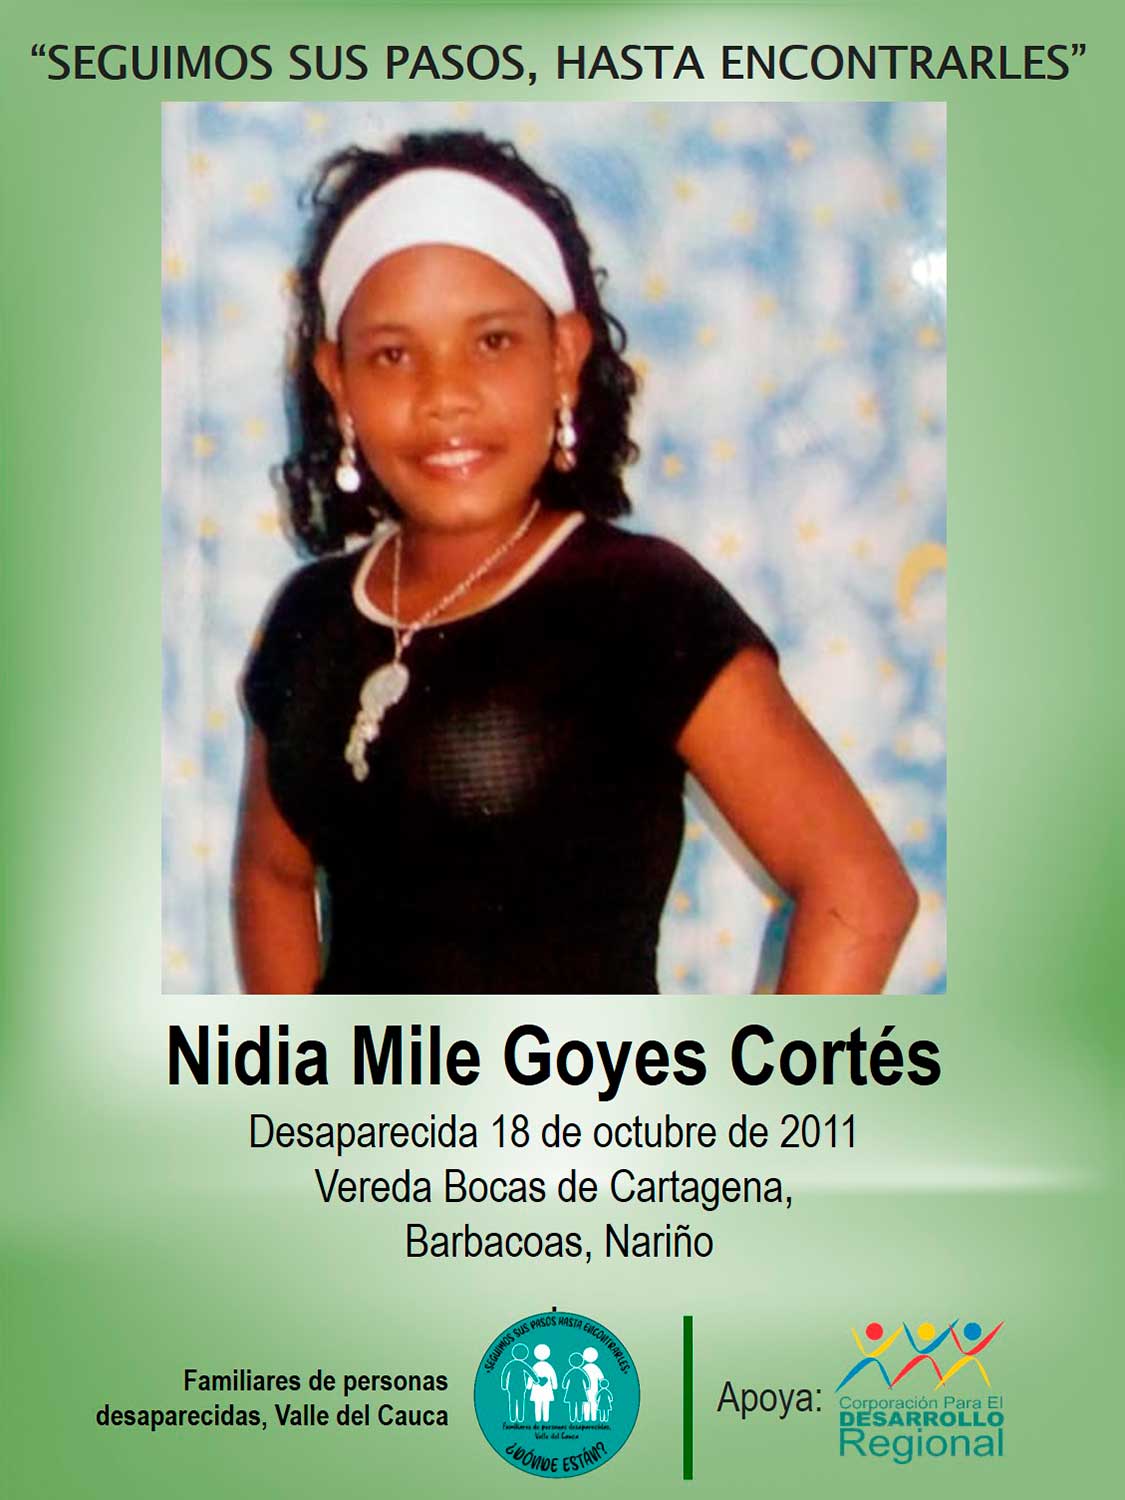 Nidia Mile Goyes Cortés